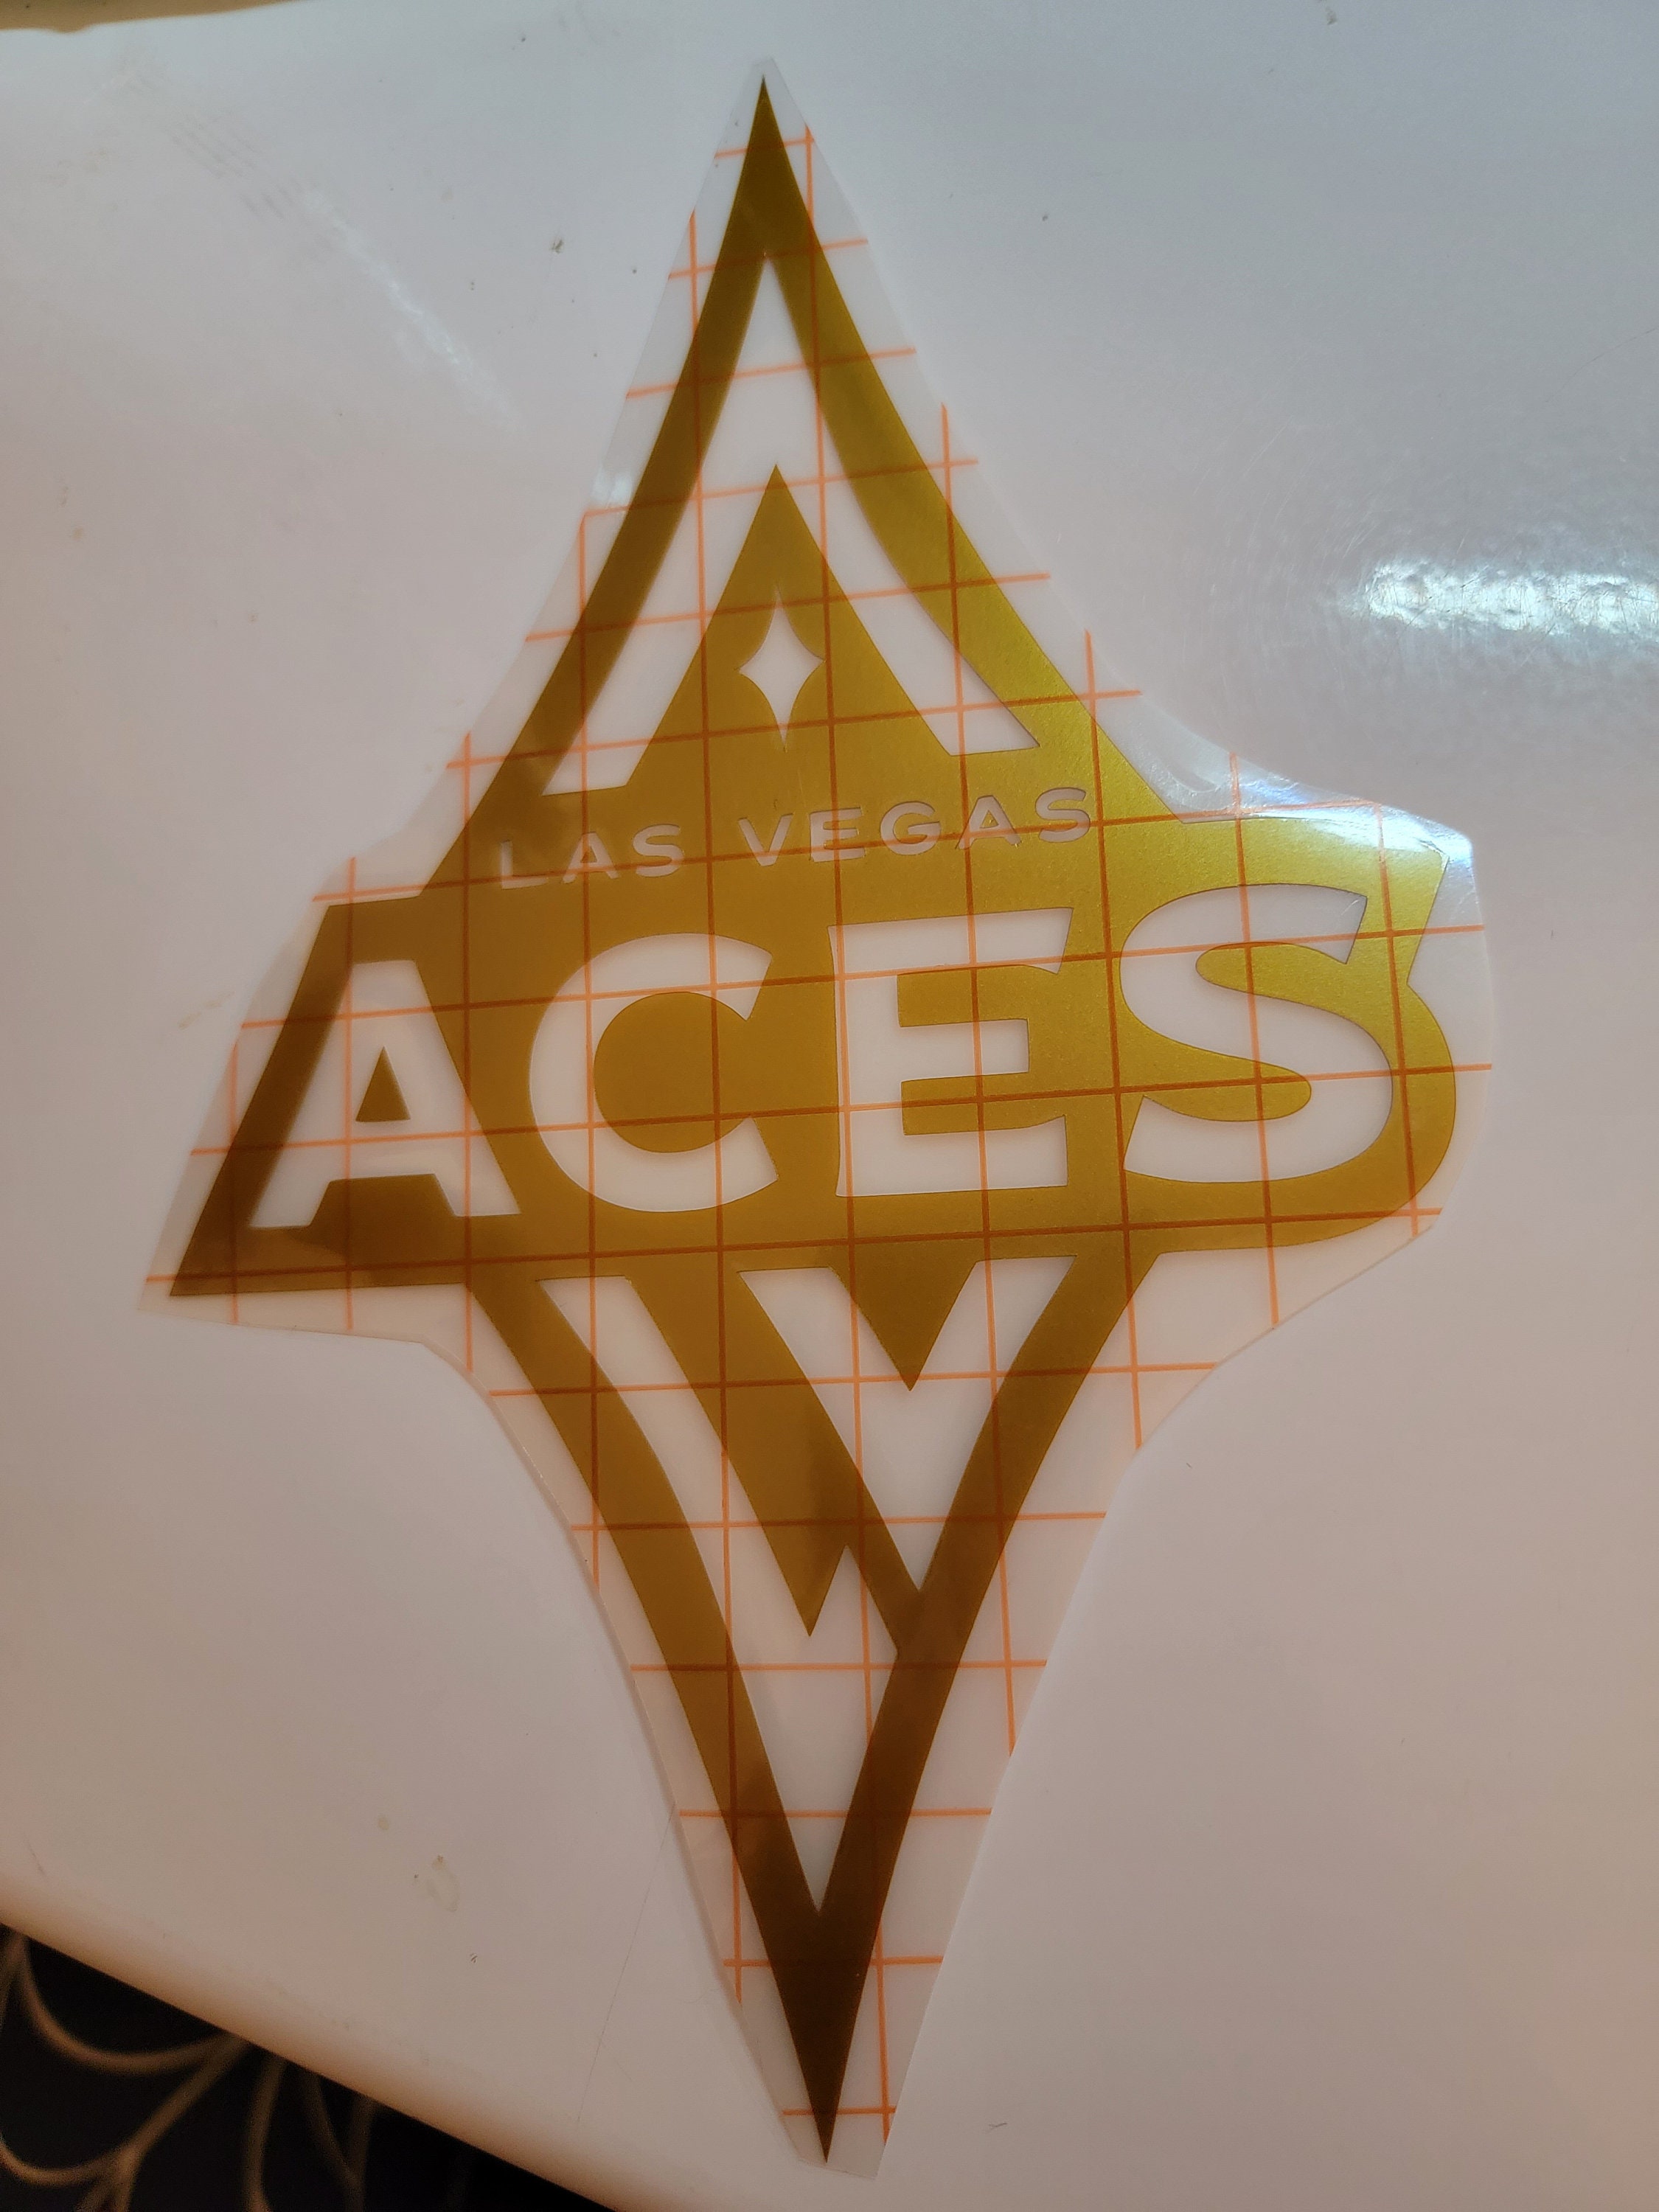 Las Vegas Aces Car Decals 